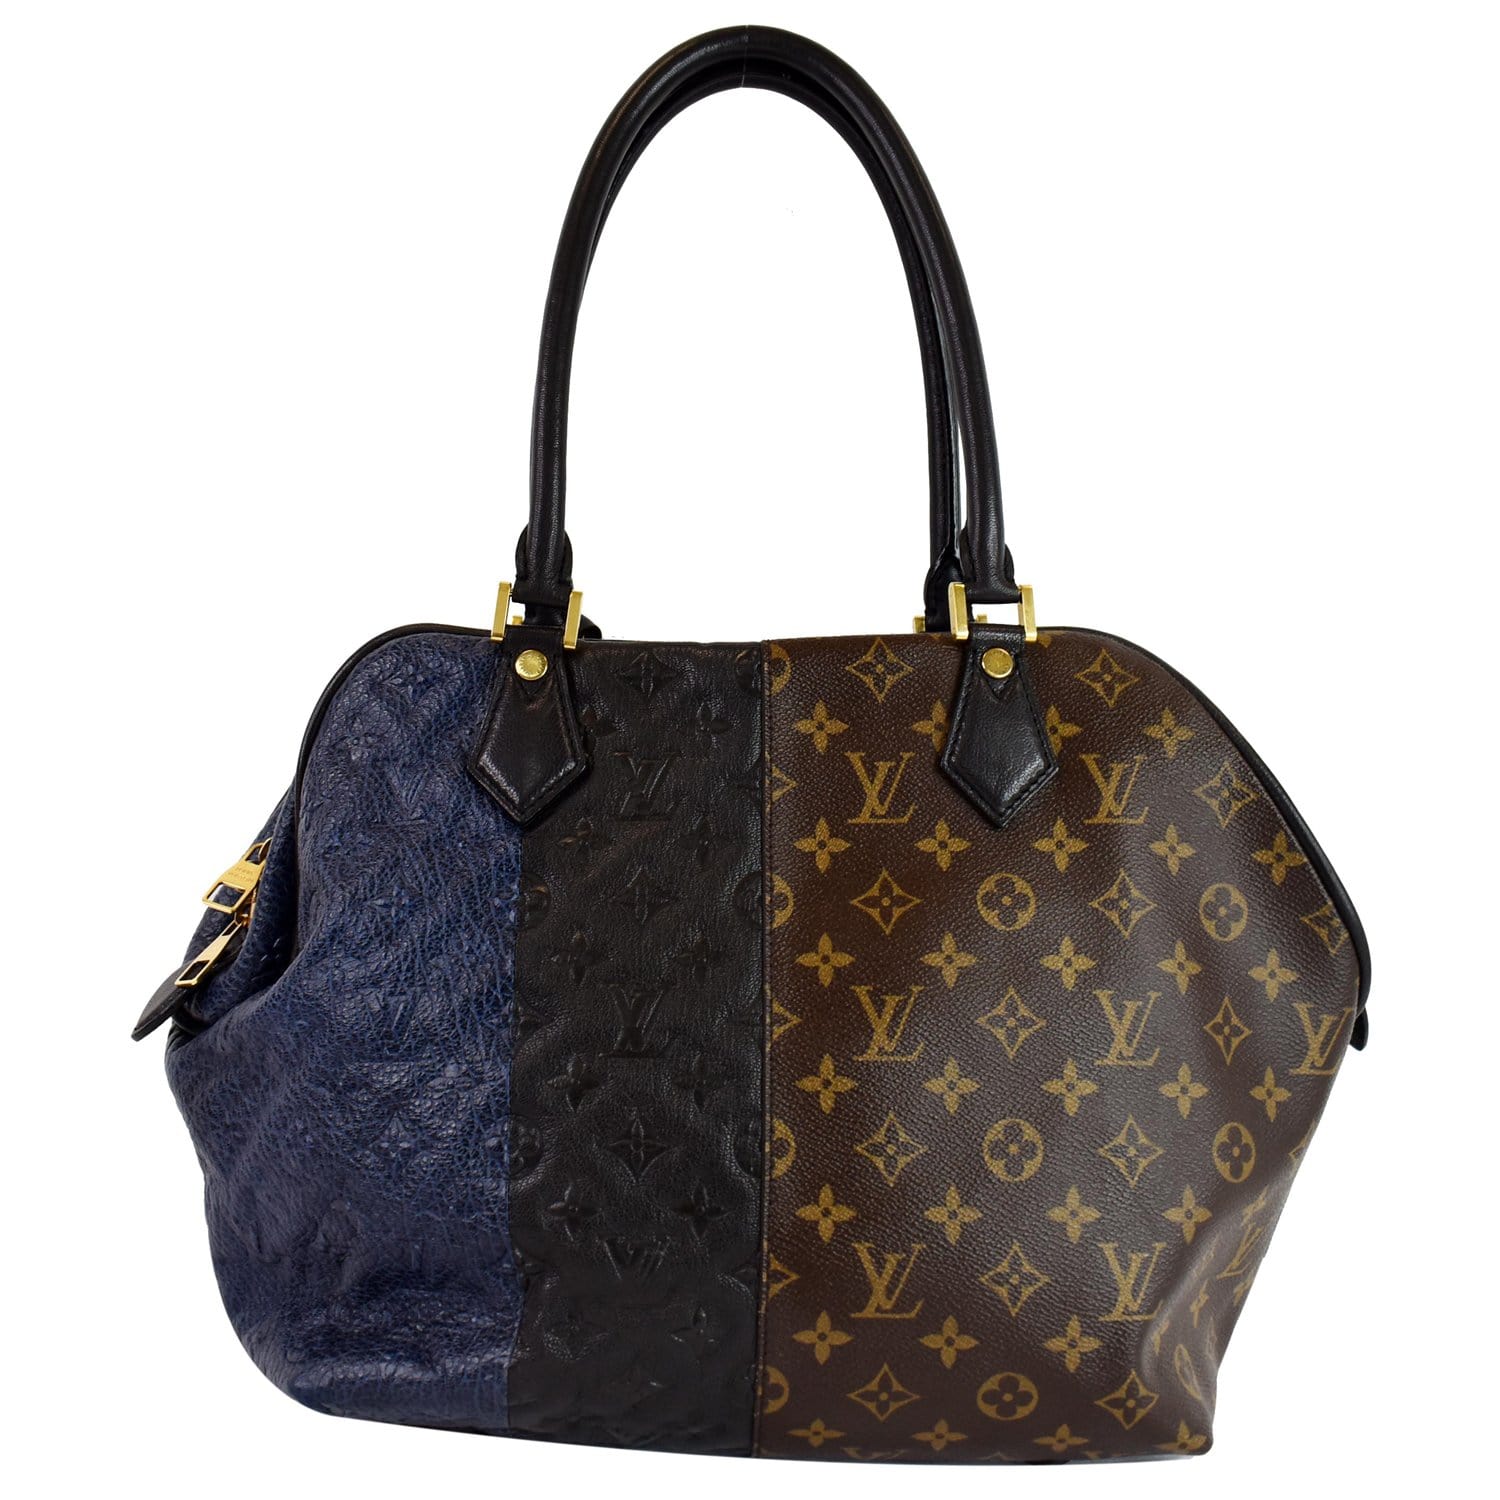 Louis Vuitton Limited Edition Monogram Tote Bag